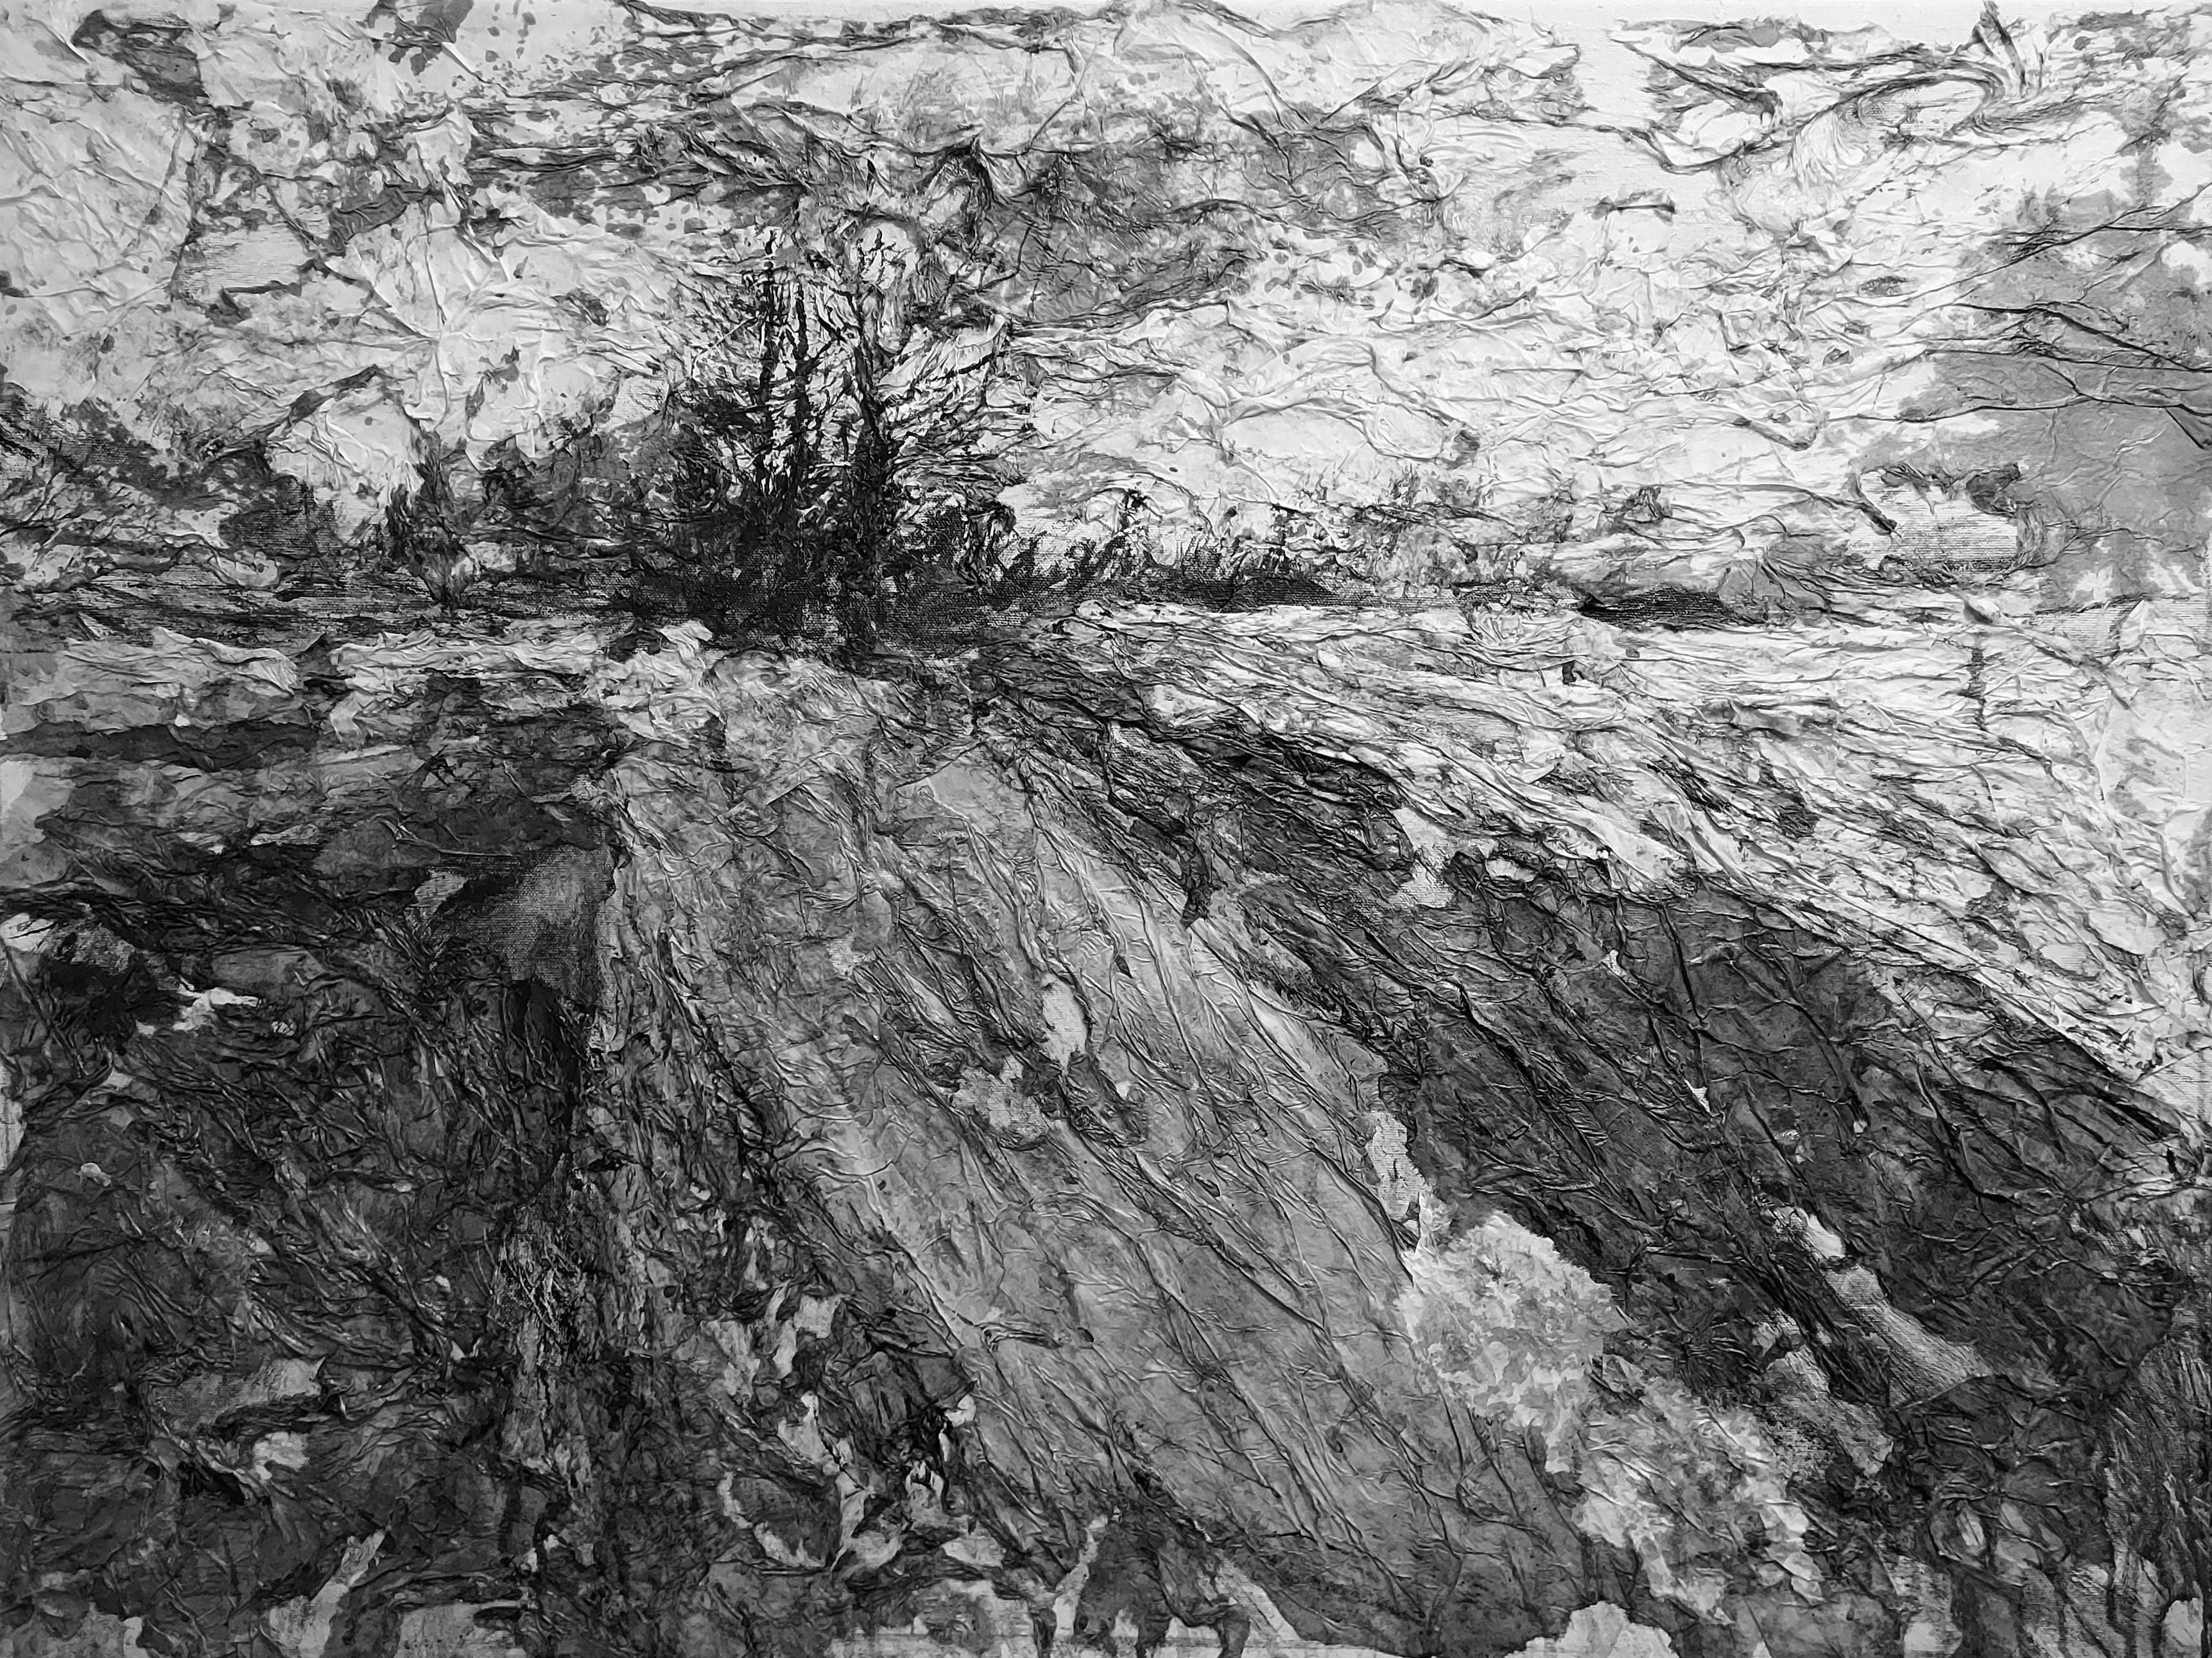 Landscape Painting AsyaDodina SlavaPolishchuk - Road XIII, paysage monochrome, noir et blanc et gris